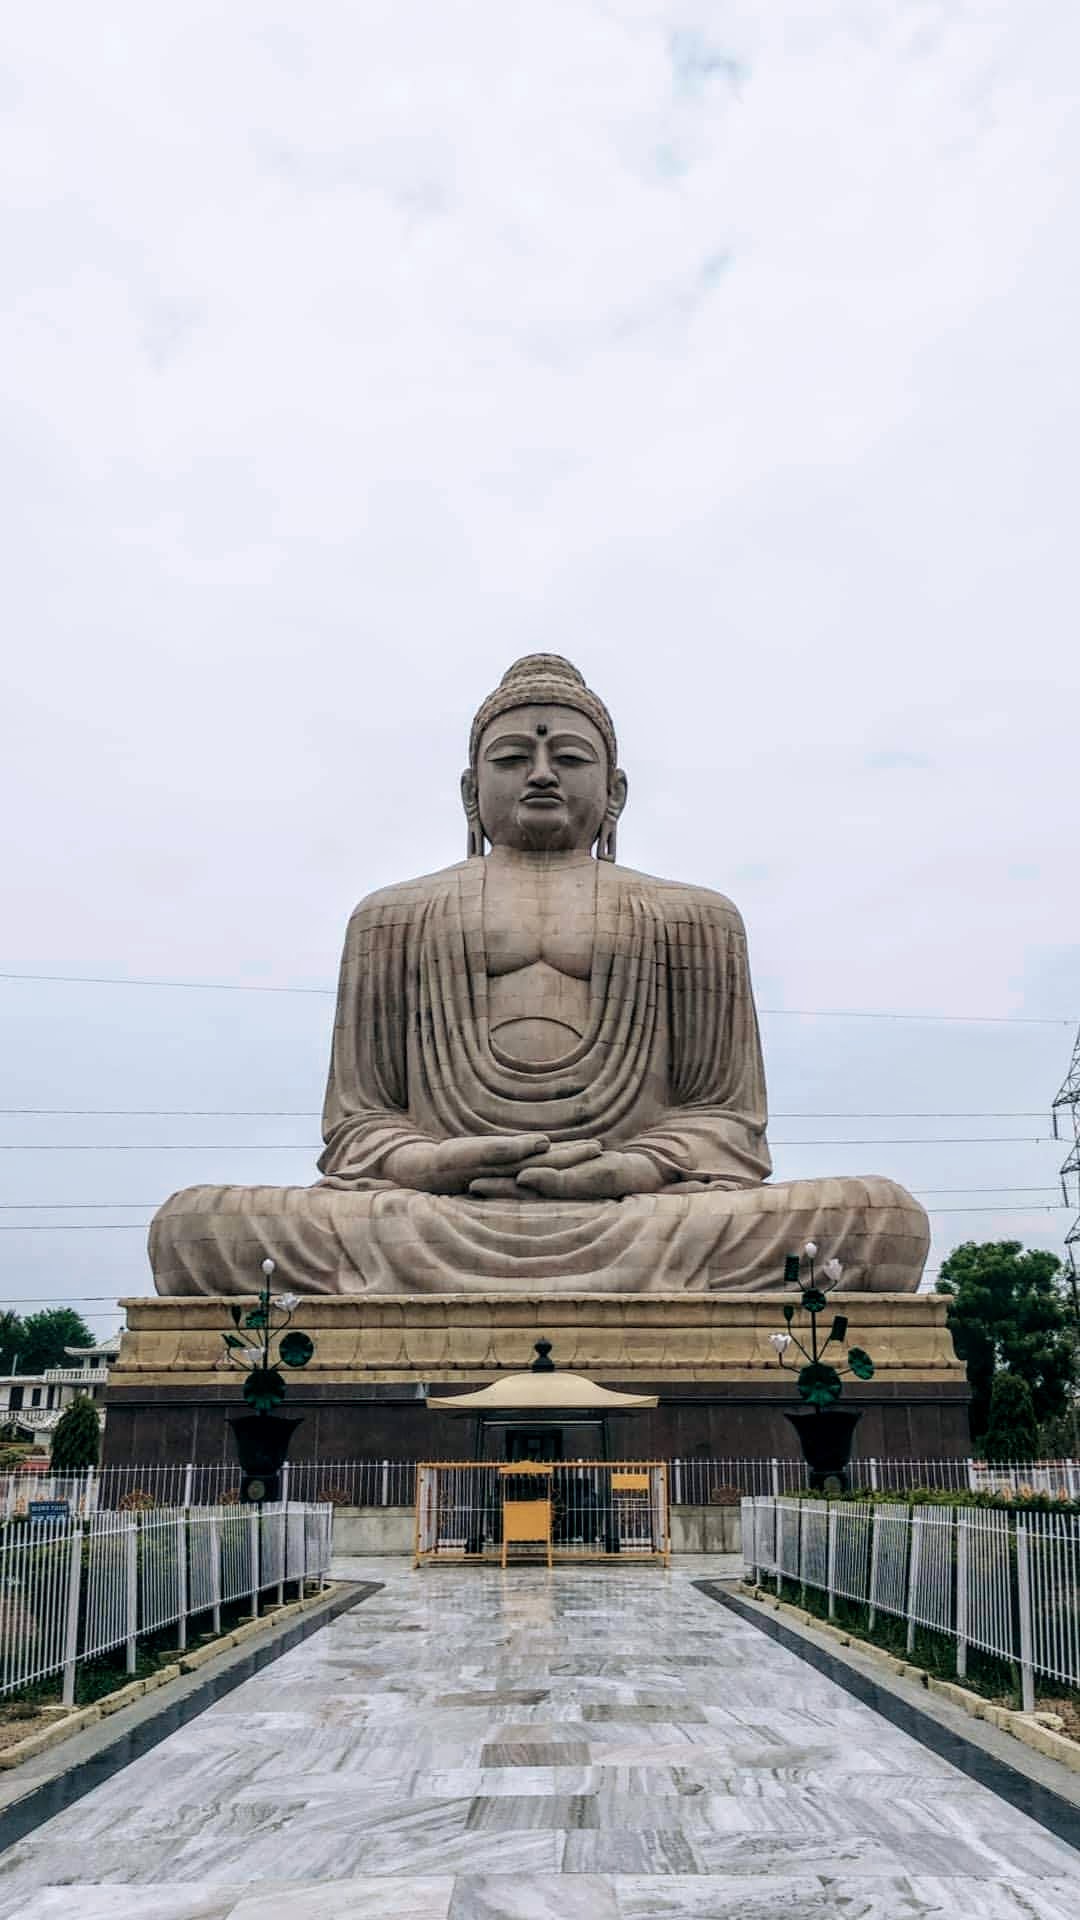 The great Buddha statue